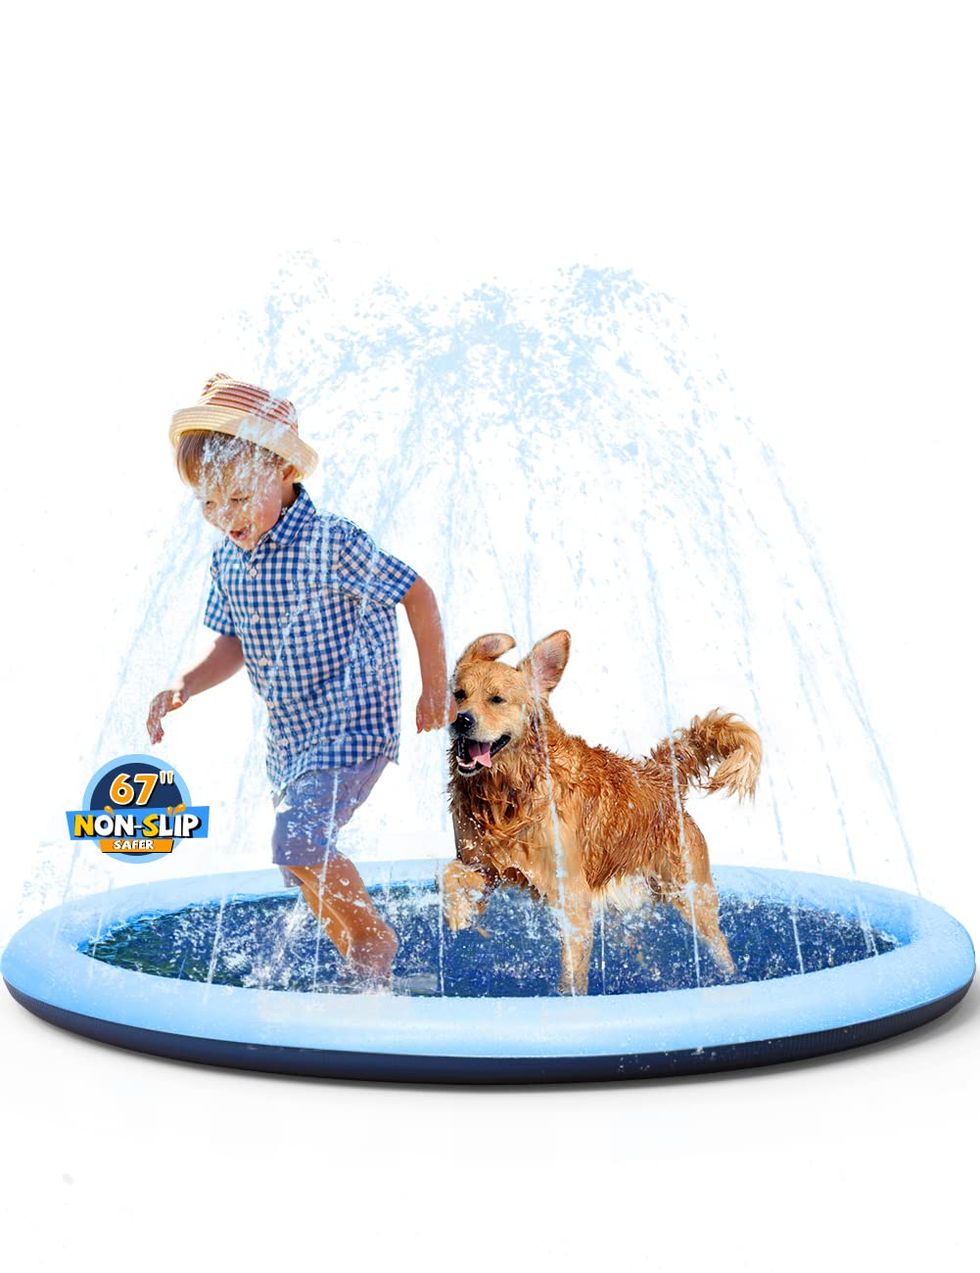 VISTOP Non-Slip Splash Pad for Kids and Dogs